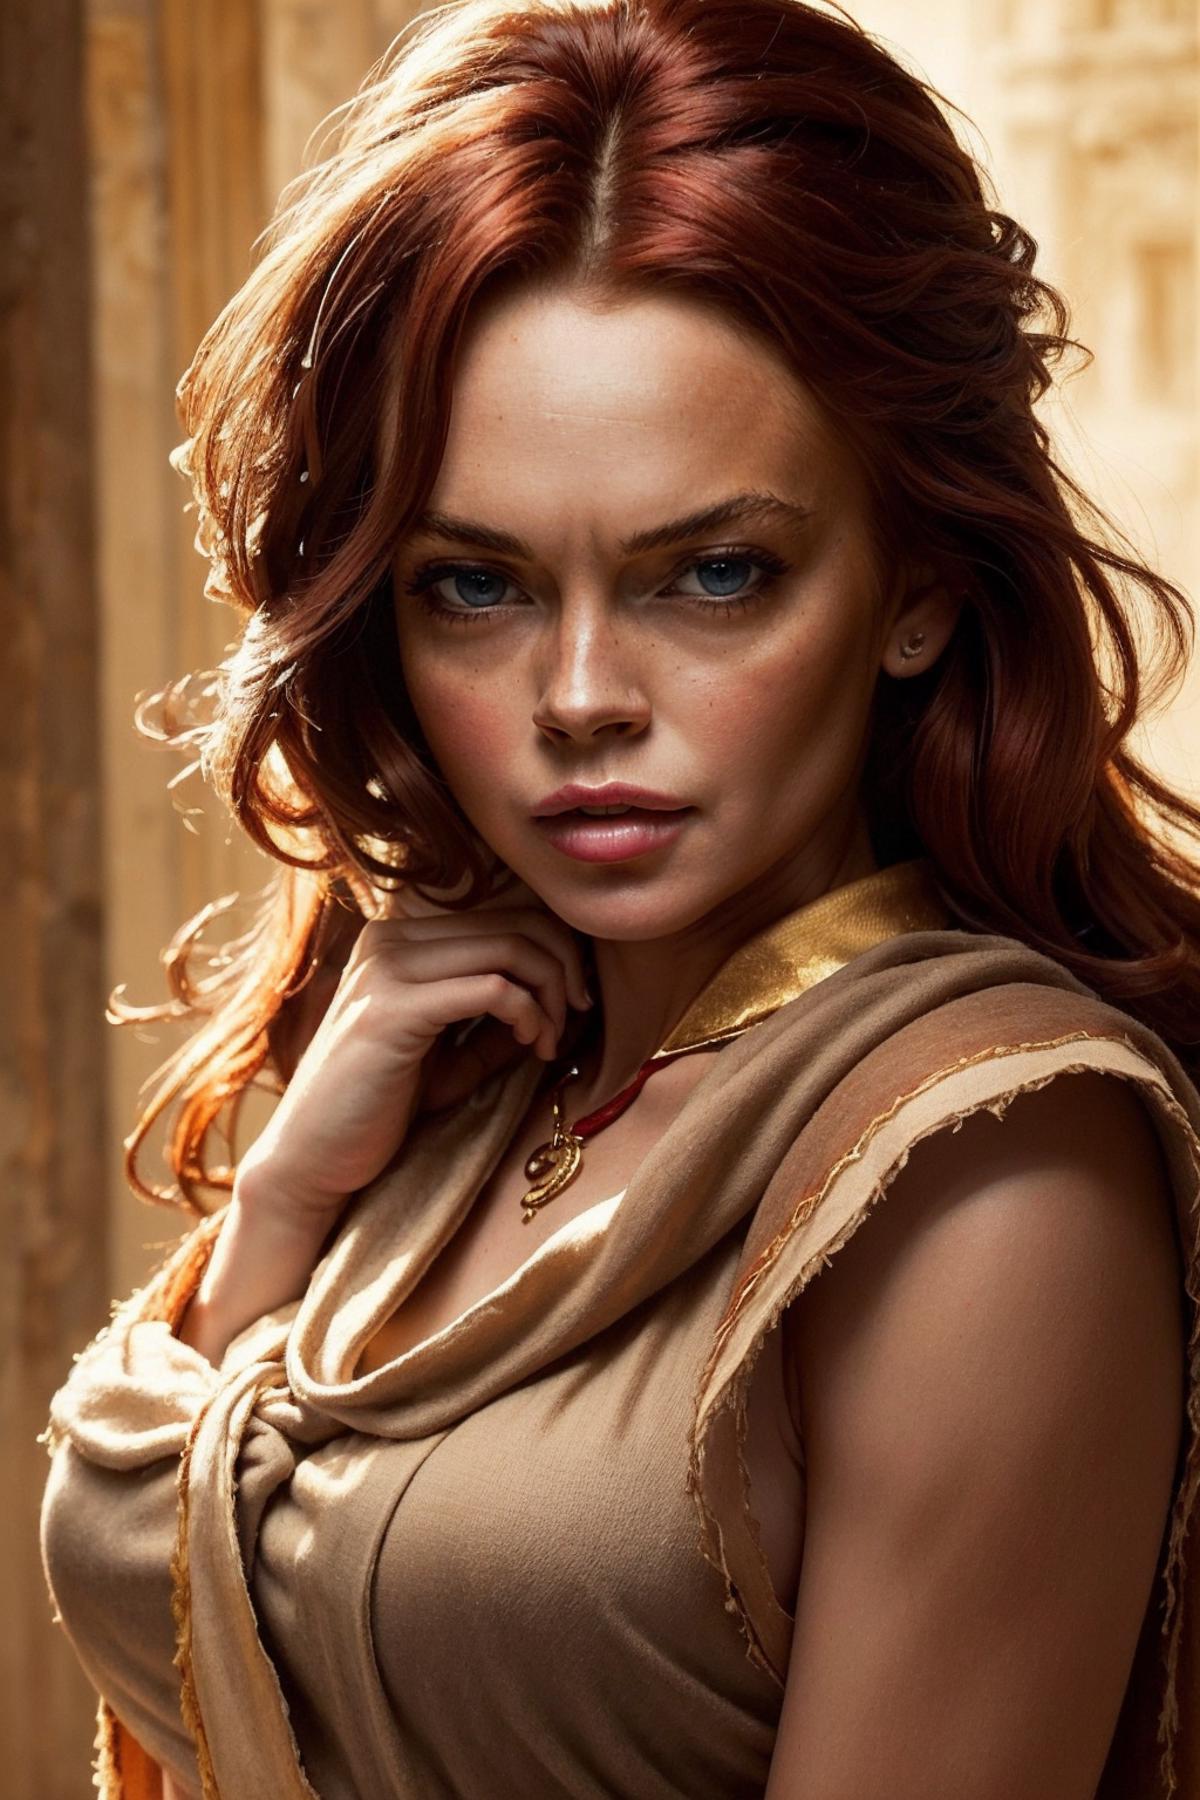 Lindsay Lohan image by FlyingSeaCreature